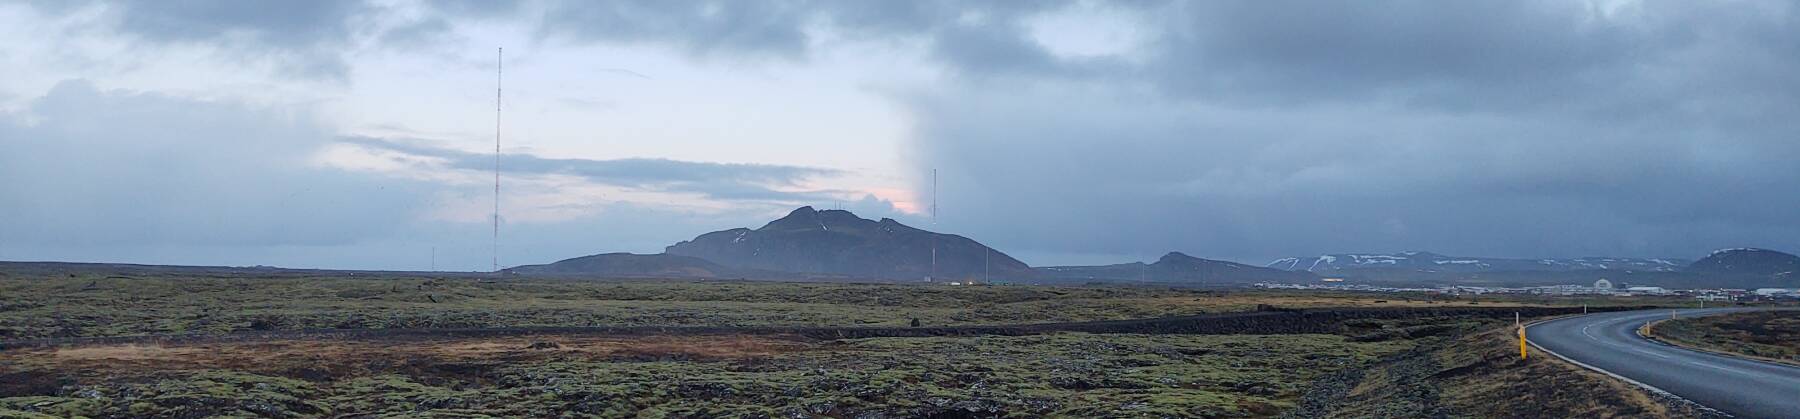 Mount Þorbjörn and Naval Radio Transmitter Facility Grindavík